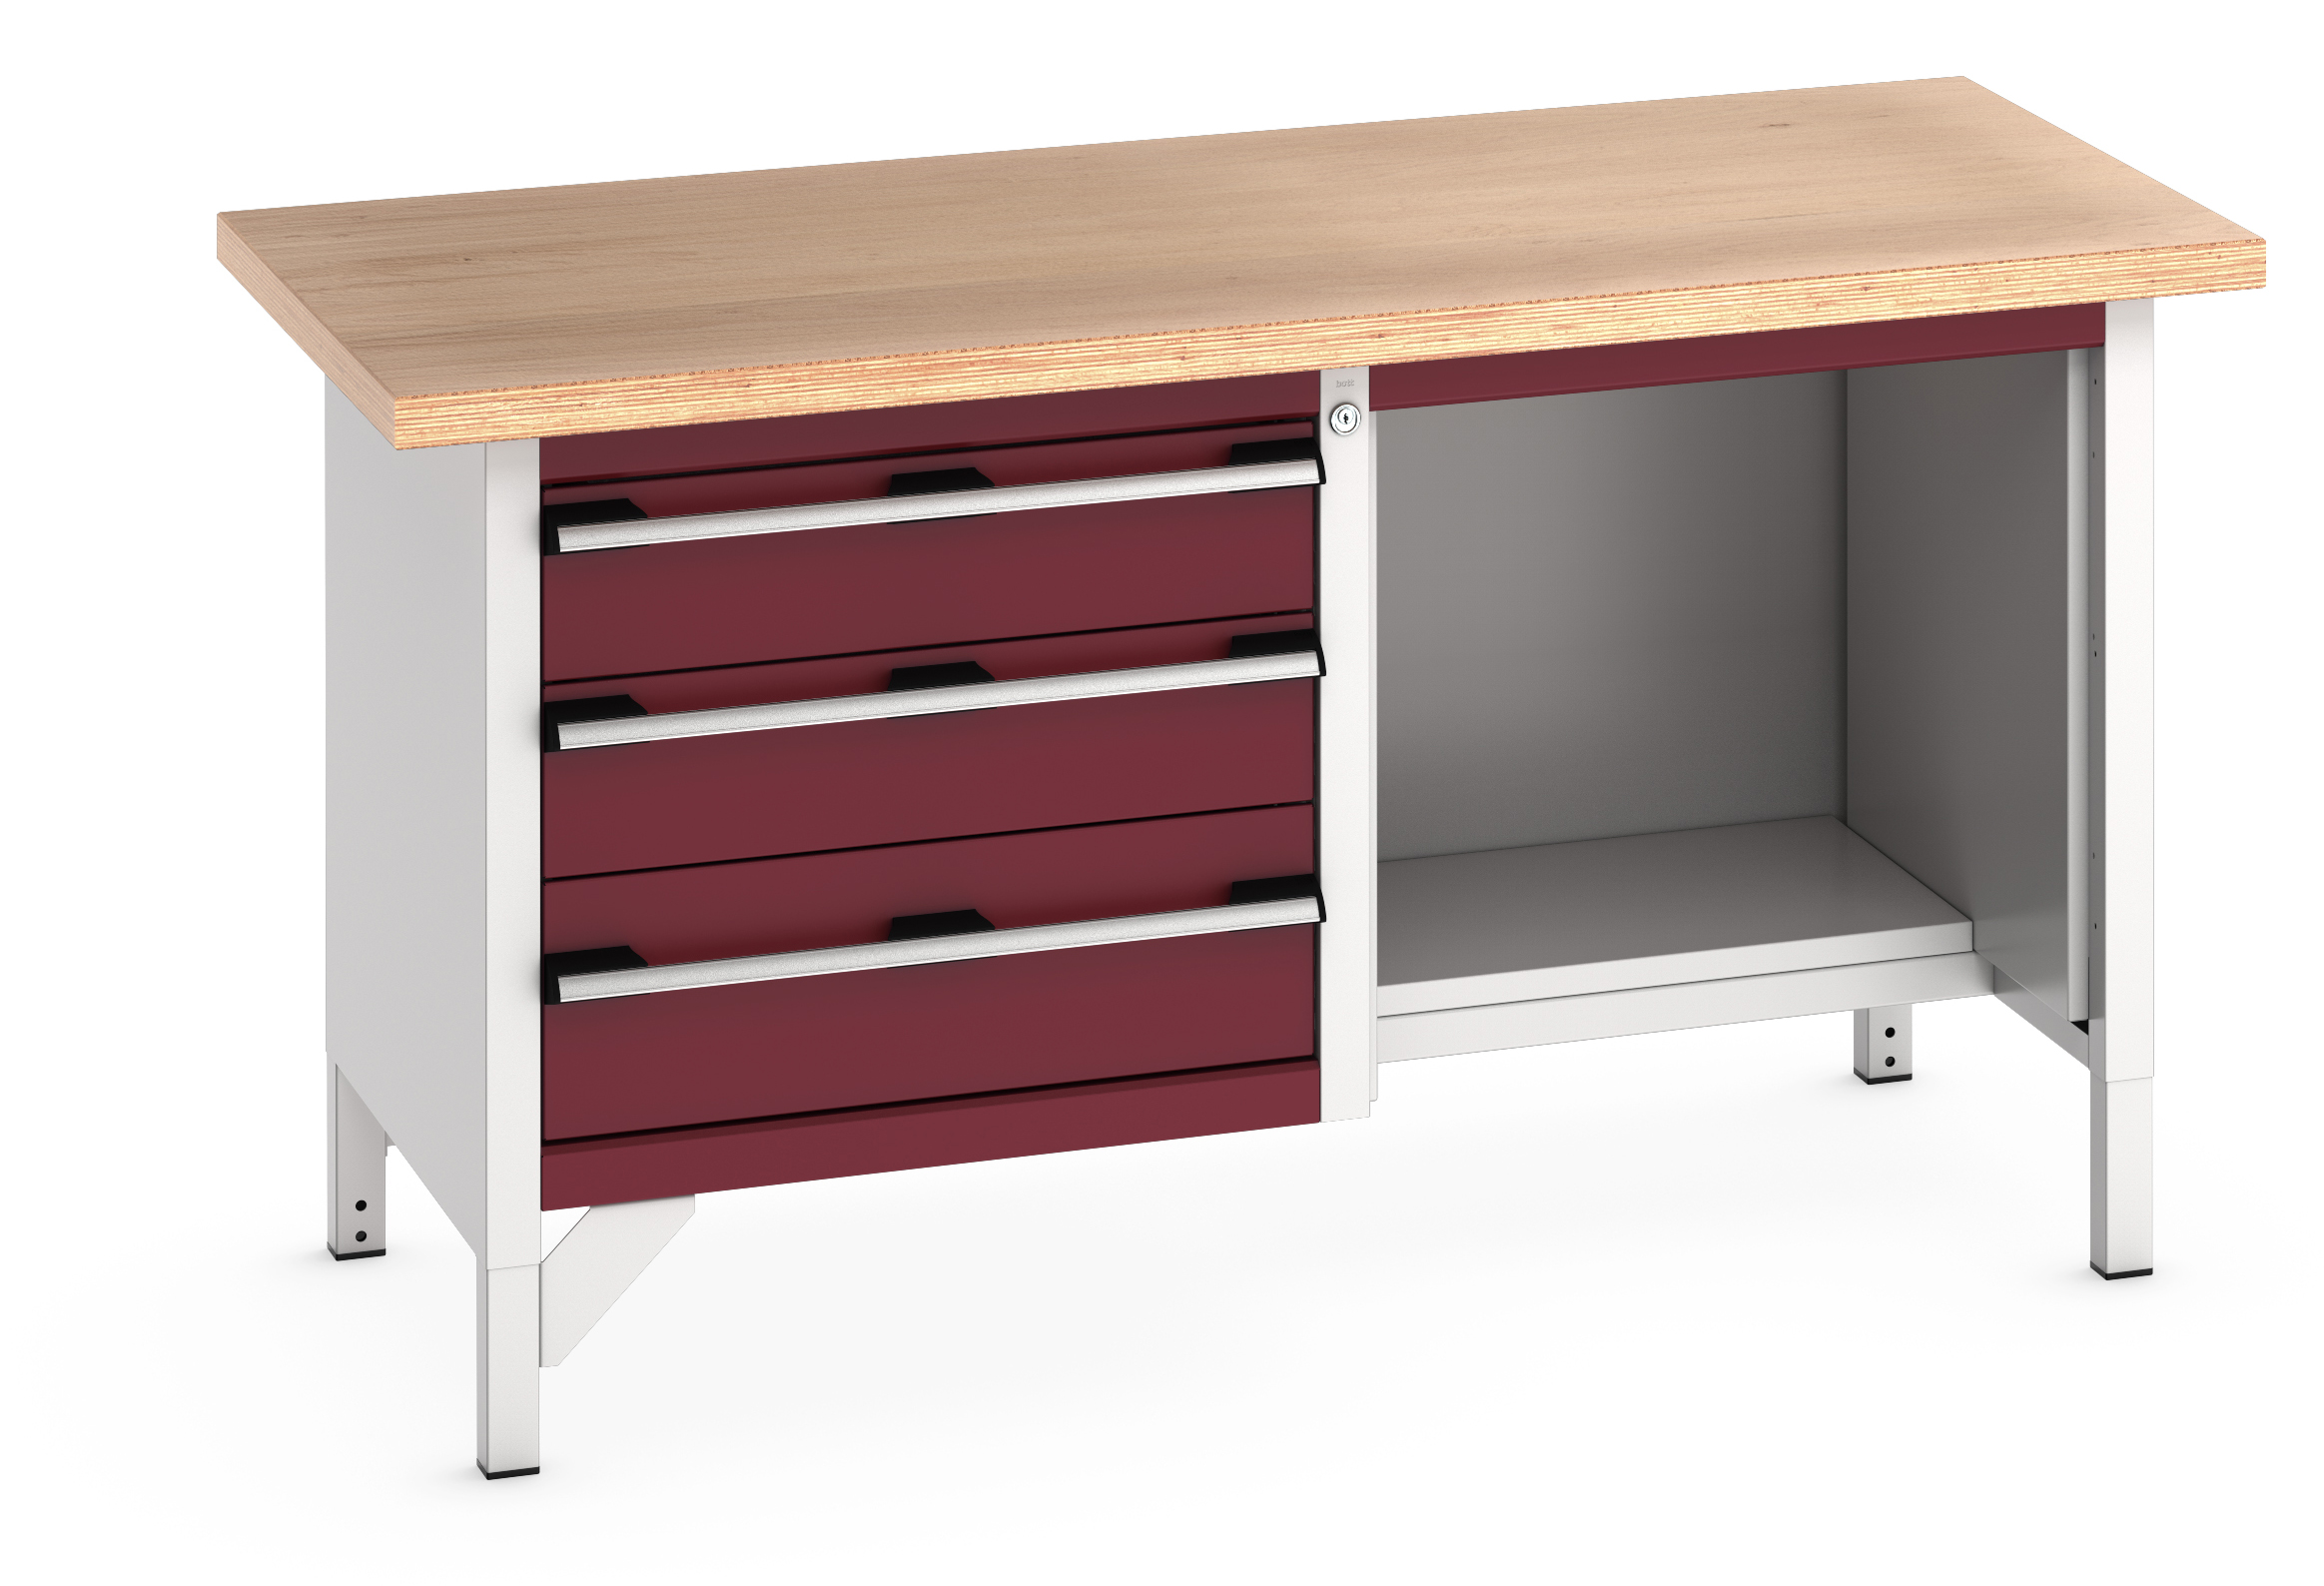 Bott Cubio Storage Bench With 3 Drawer Cabinet / Open With Half Depth Base Shelf - 41002040.24V